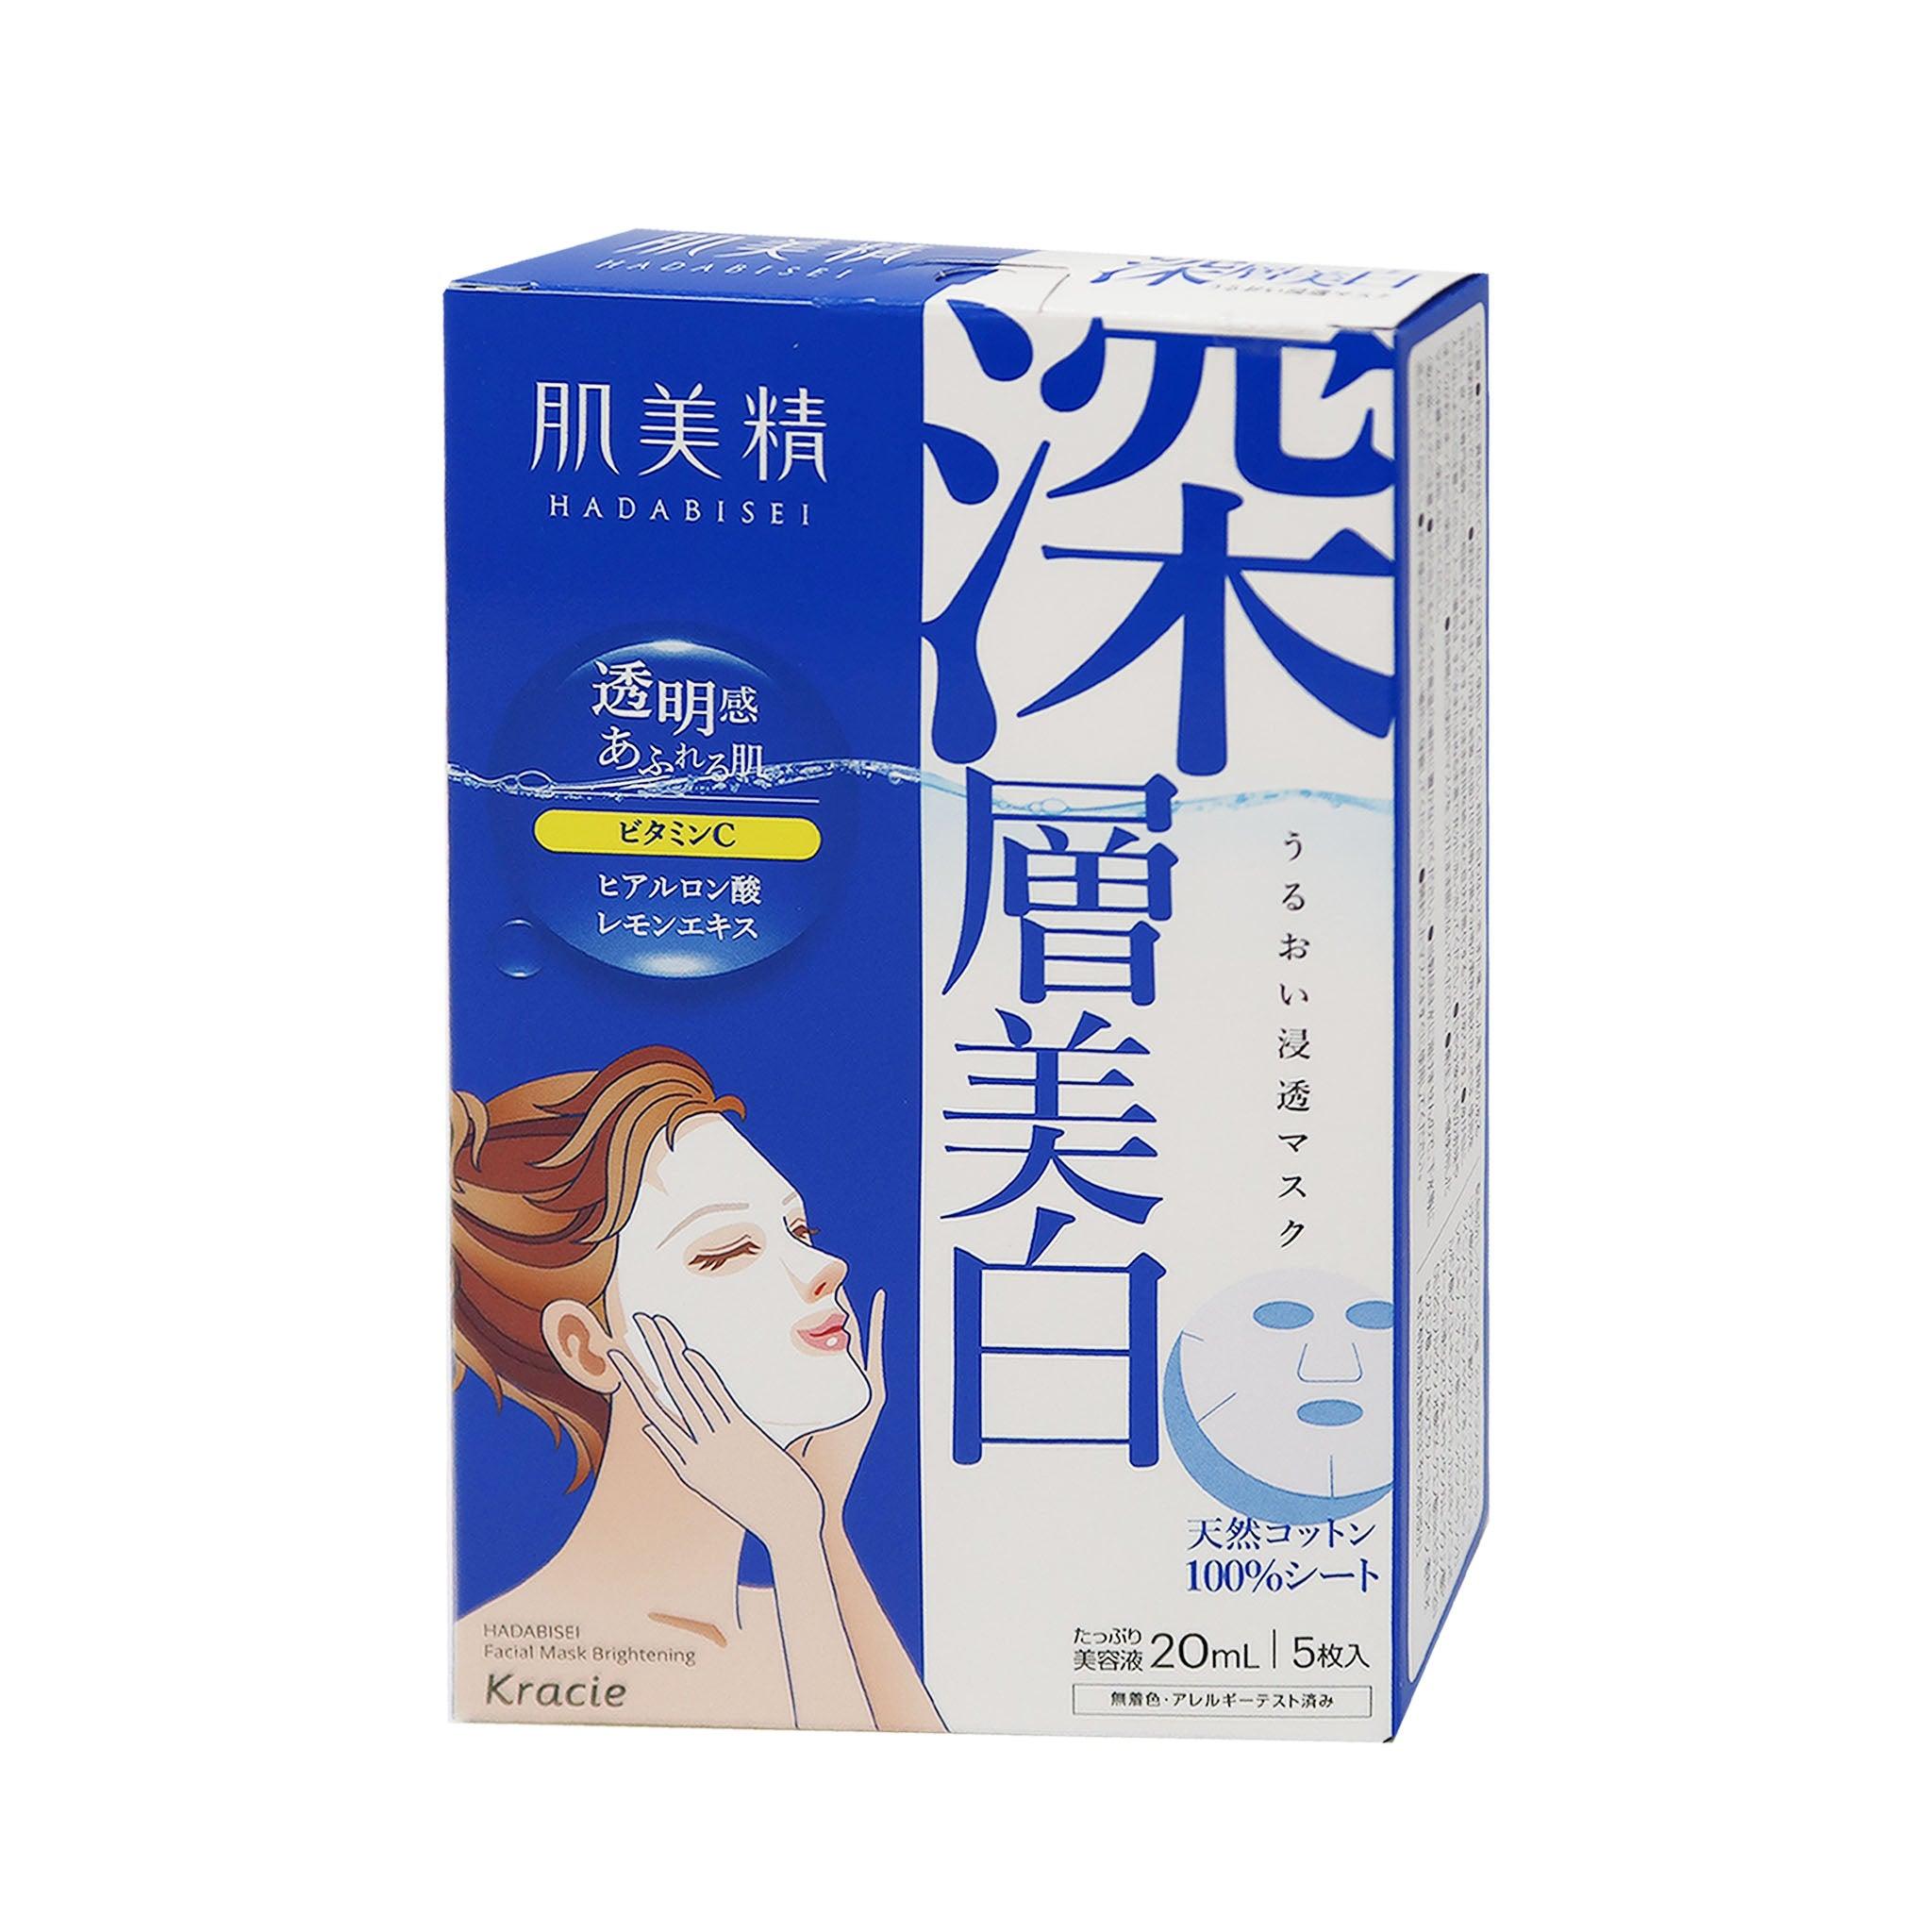 KRACIE HADABISEI Face Mask - Brightening [5PC]